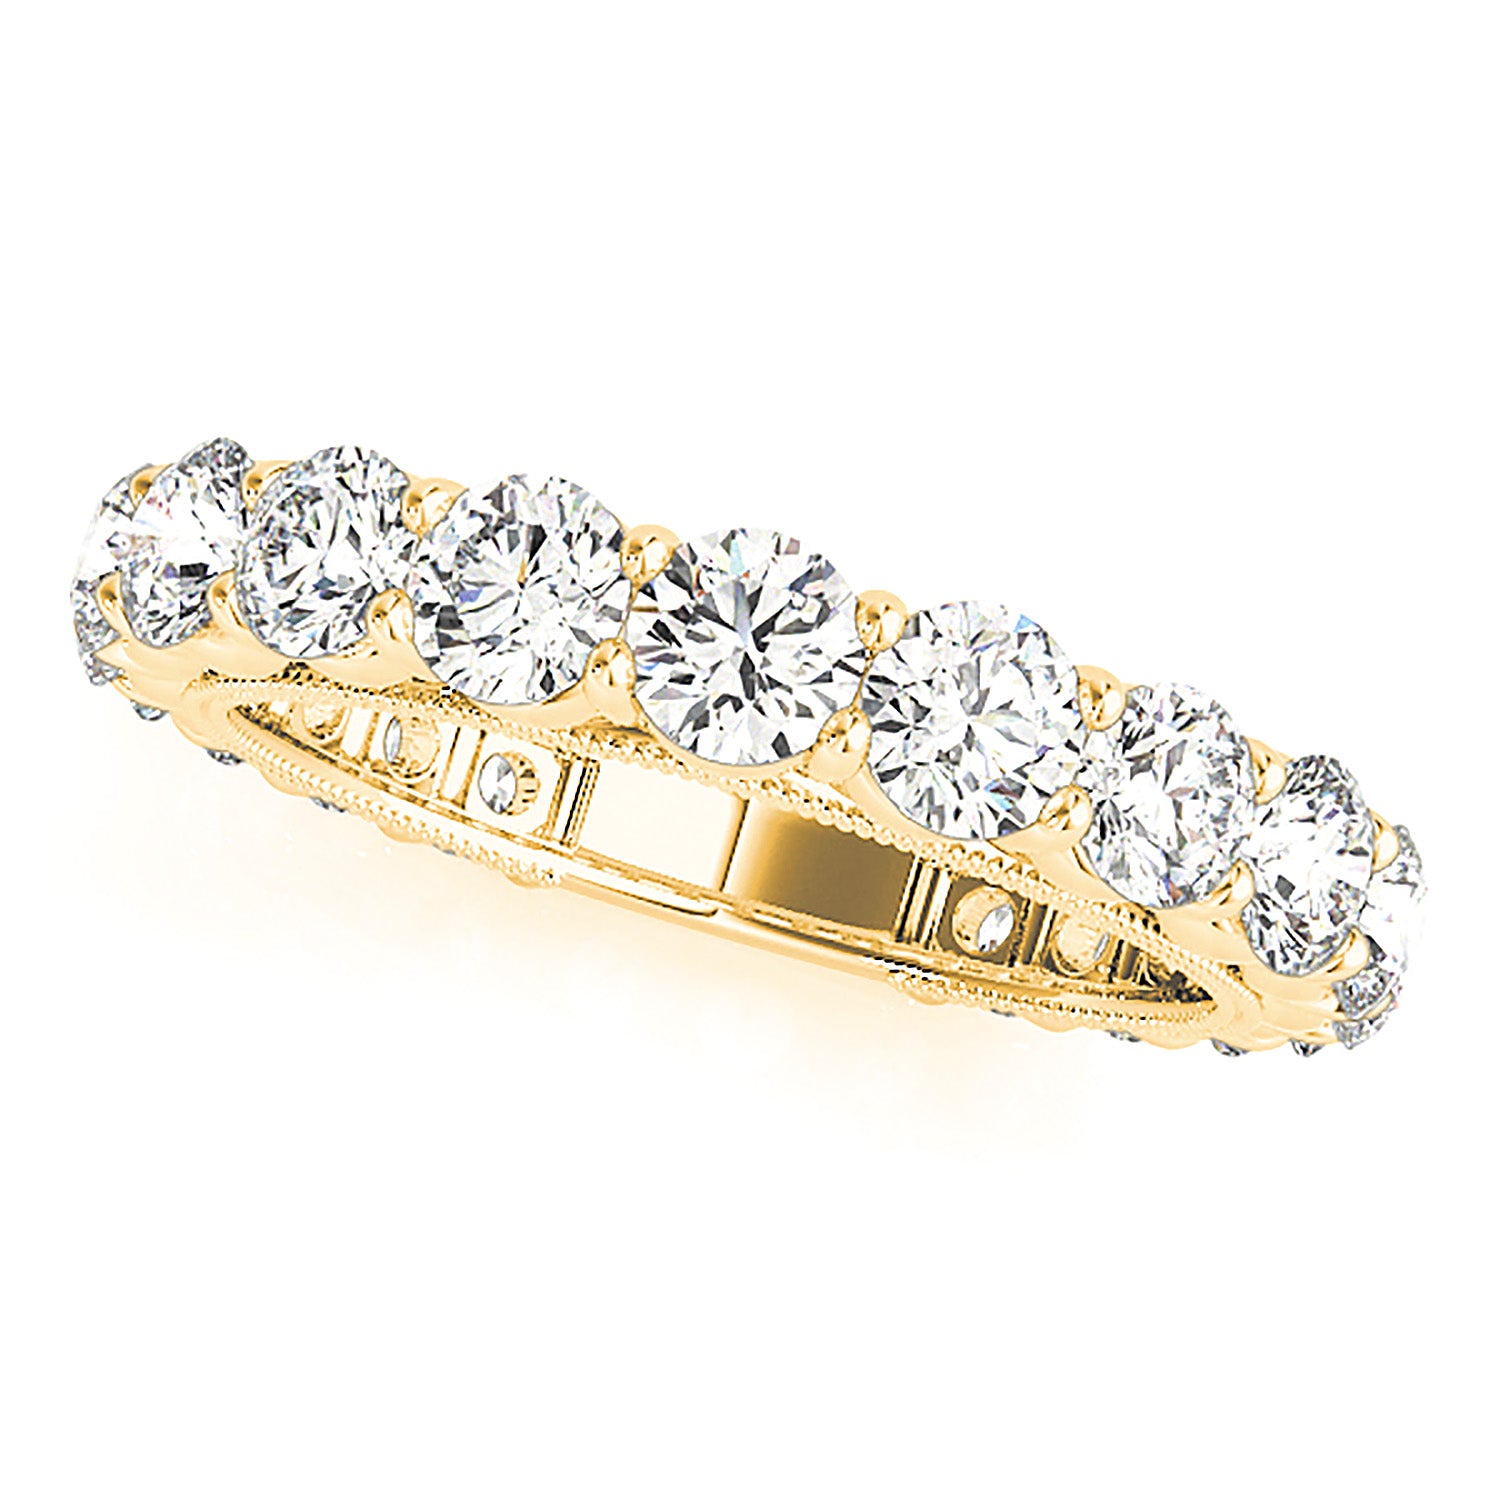 Diamond Wedding Band - 14K/18k Solid White Gold / Platinum | Prong Set Diamond Anniversary Ring | Modern Design-in 14K/18K White, Yellow, Rose Gold and Platinum - Christmas Jewelry Gift -VIRABYANI